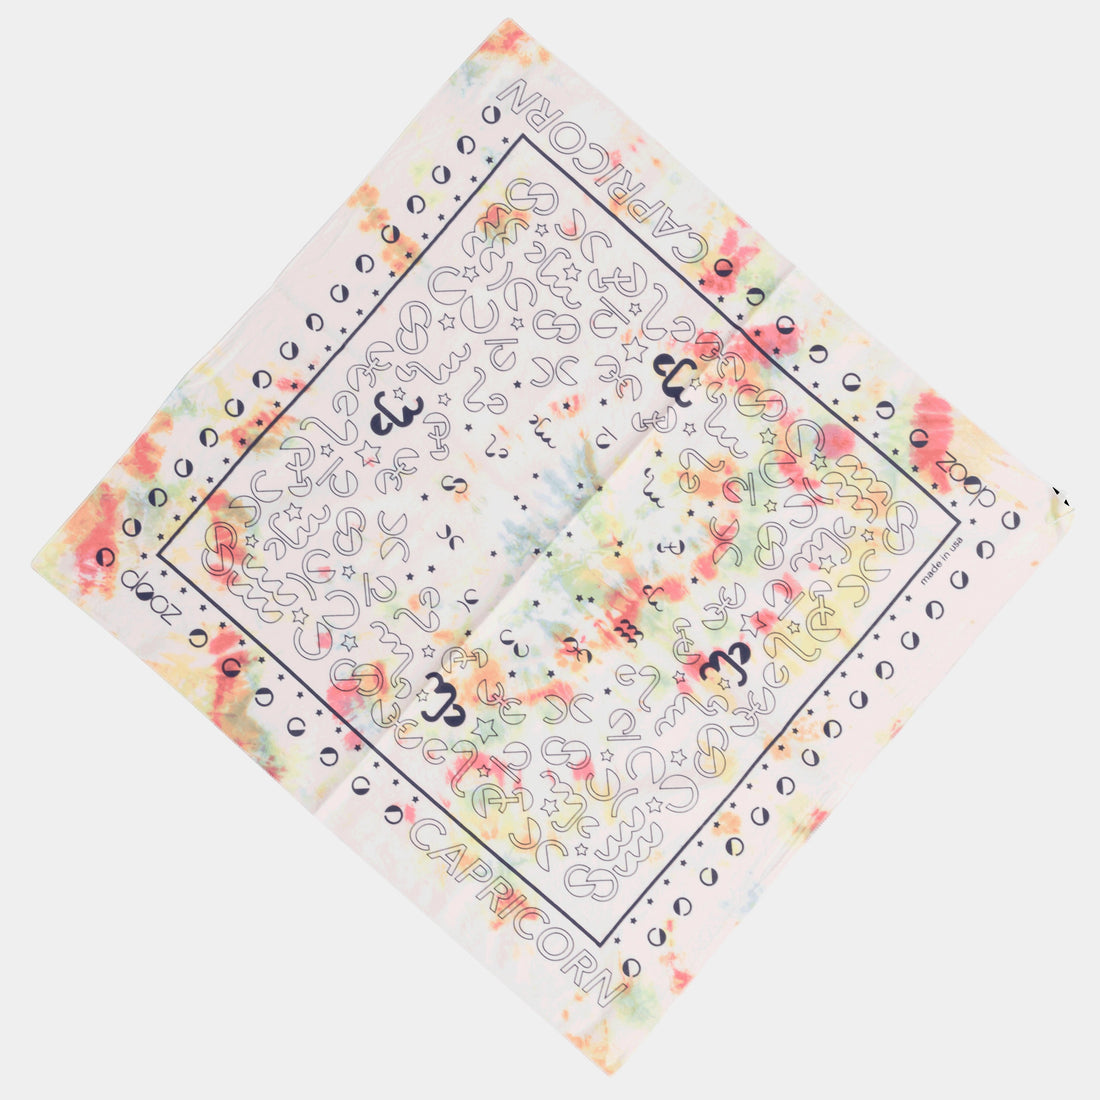 Dooz Capricorn screen printed cotton bandana in rainbow tie dye